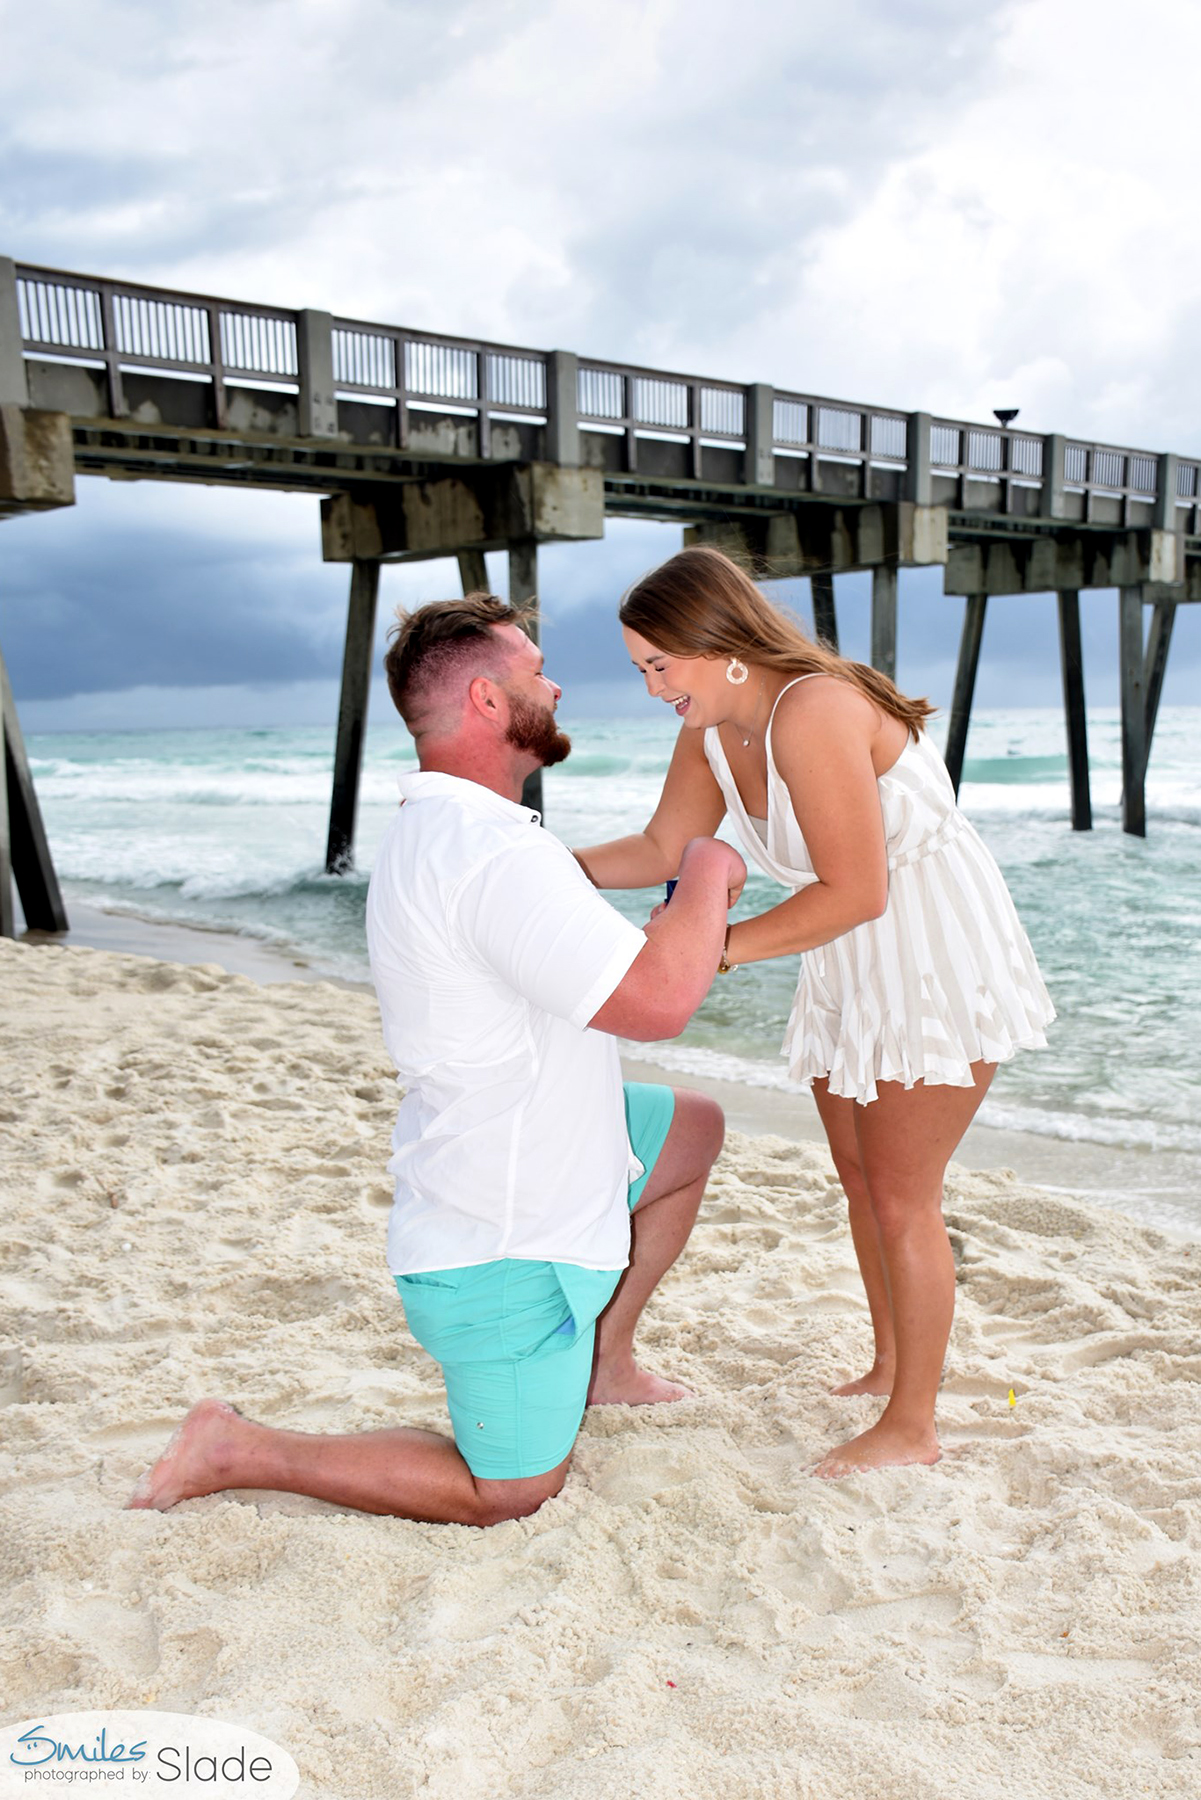 Surprise Proposal photos in Panama City Beach.